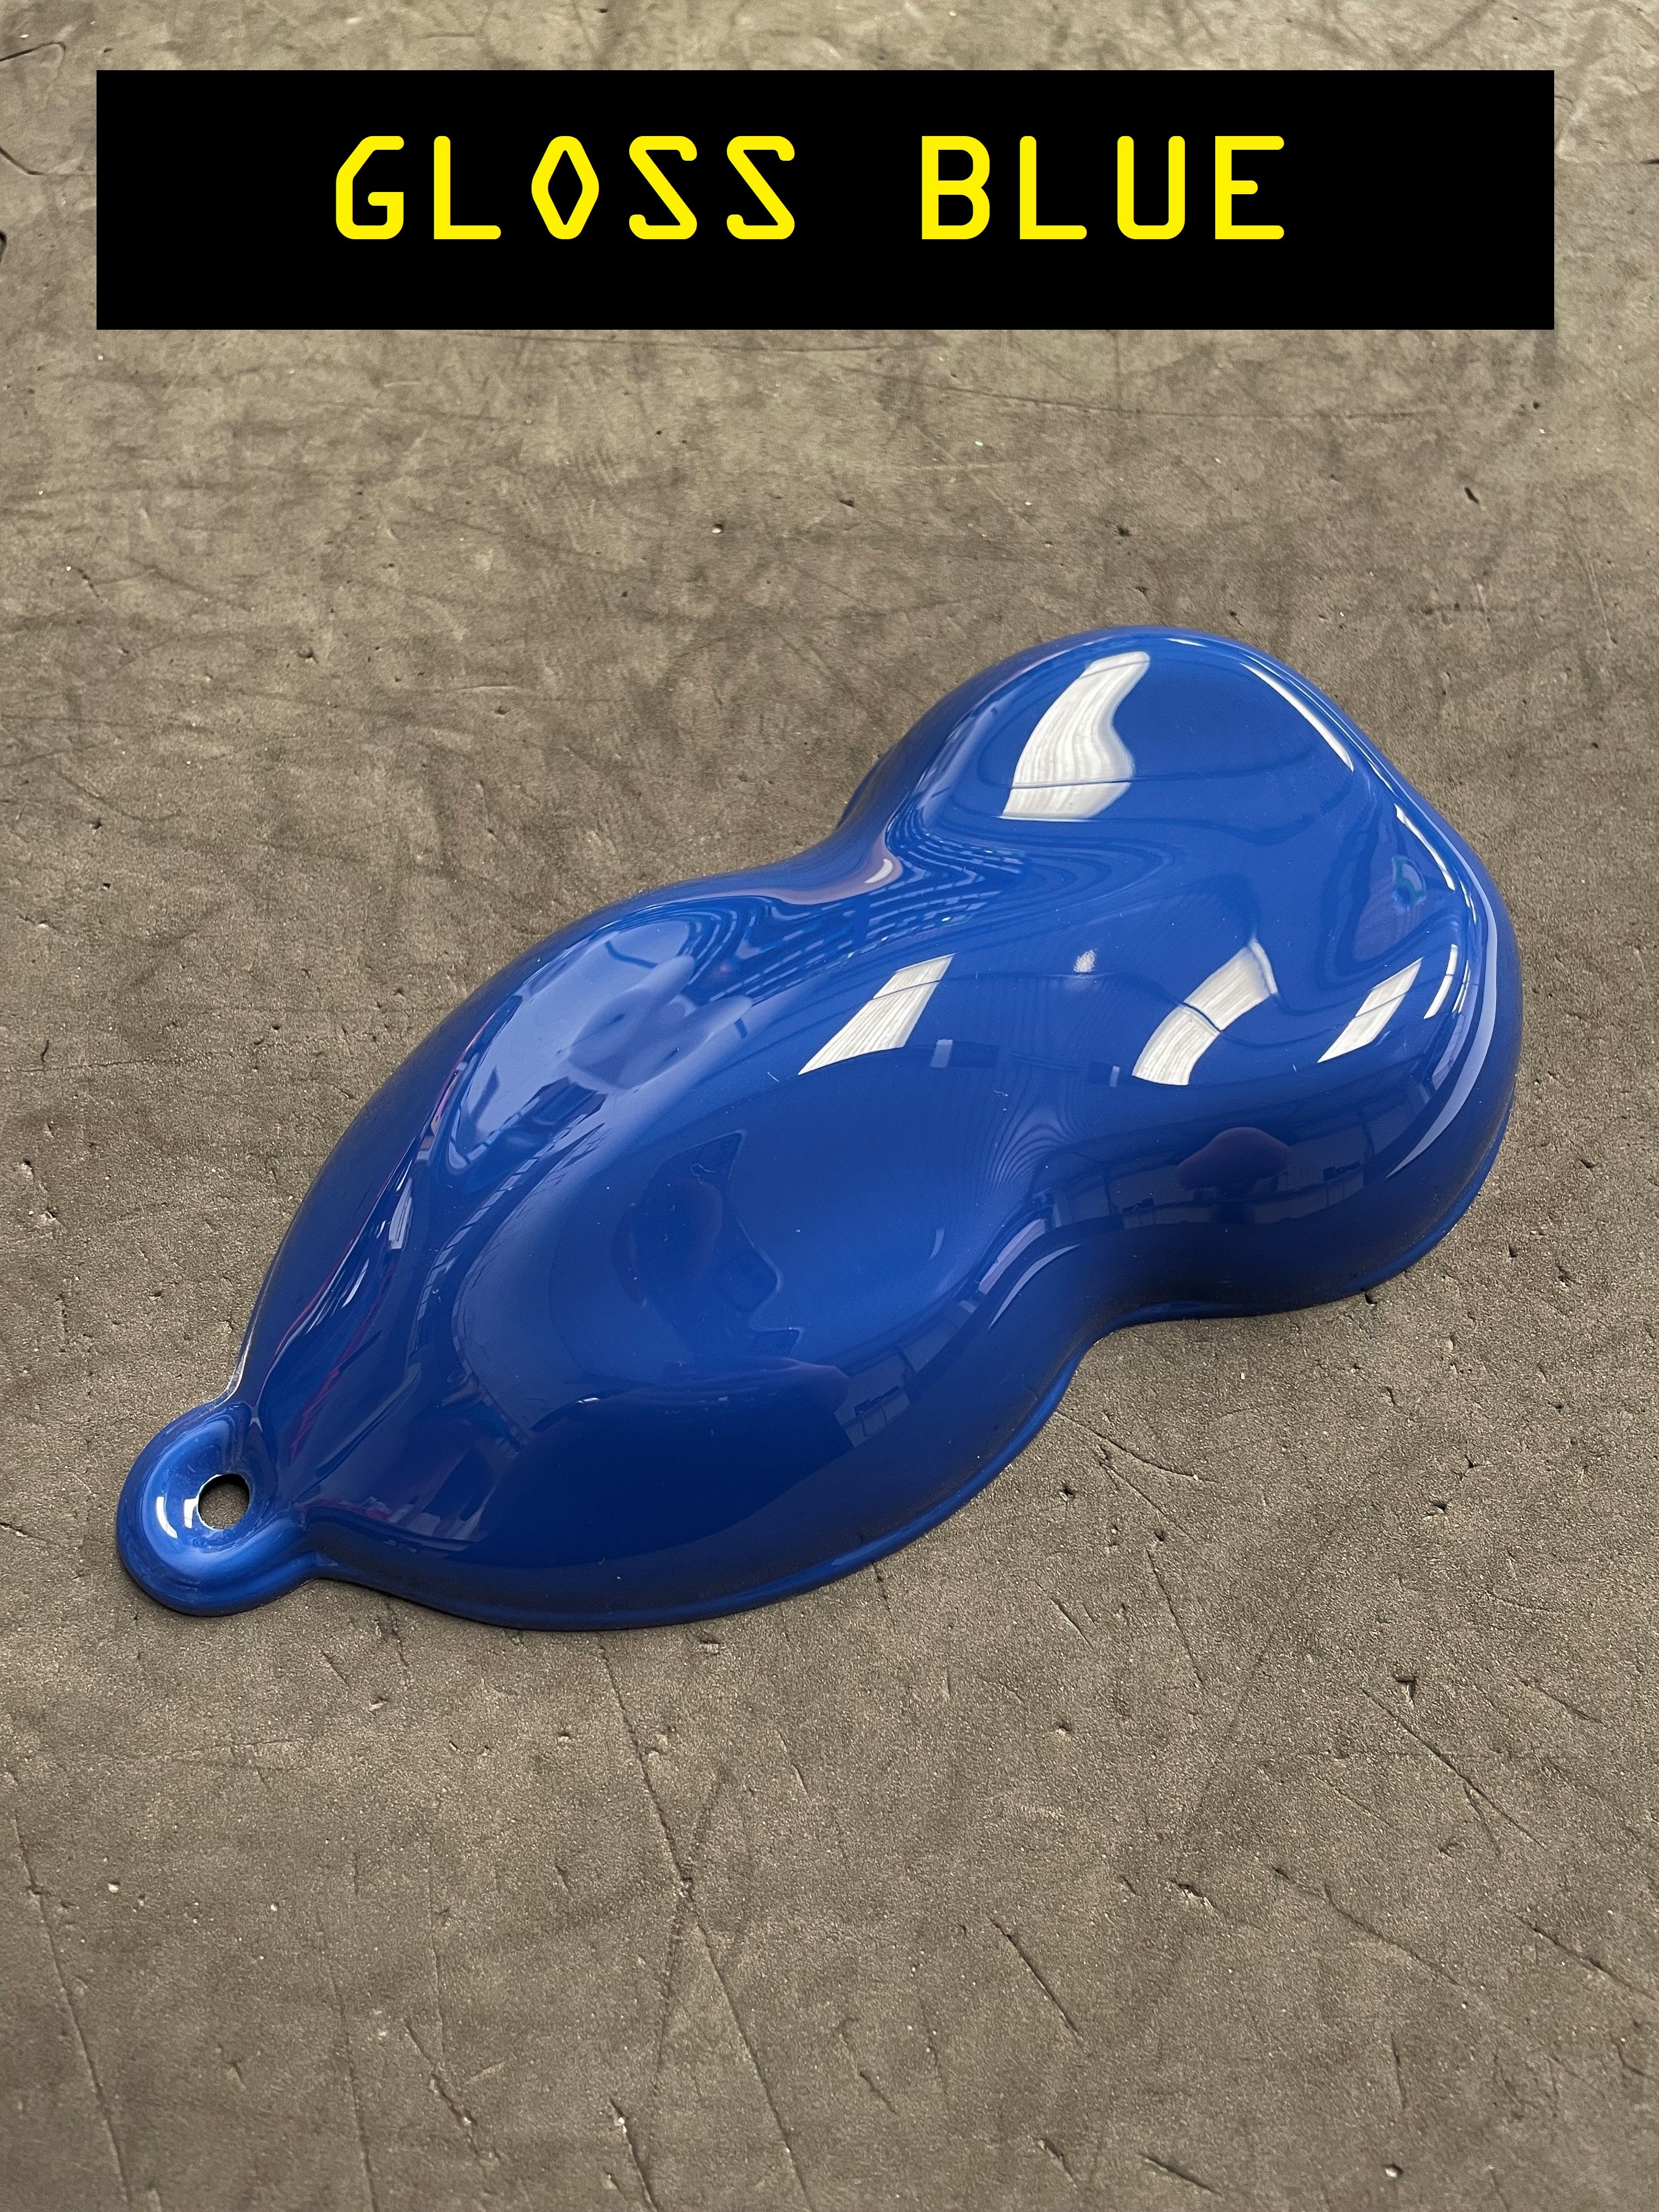 Proform Brake Fluid Reservoir Cap Cover - Ford Kuga (Plastic Finishes)